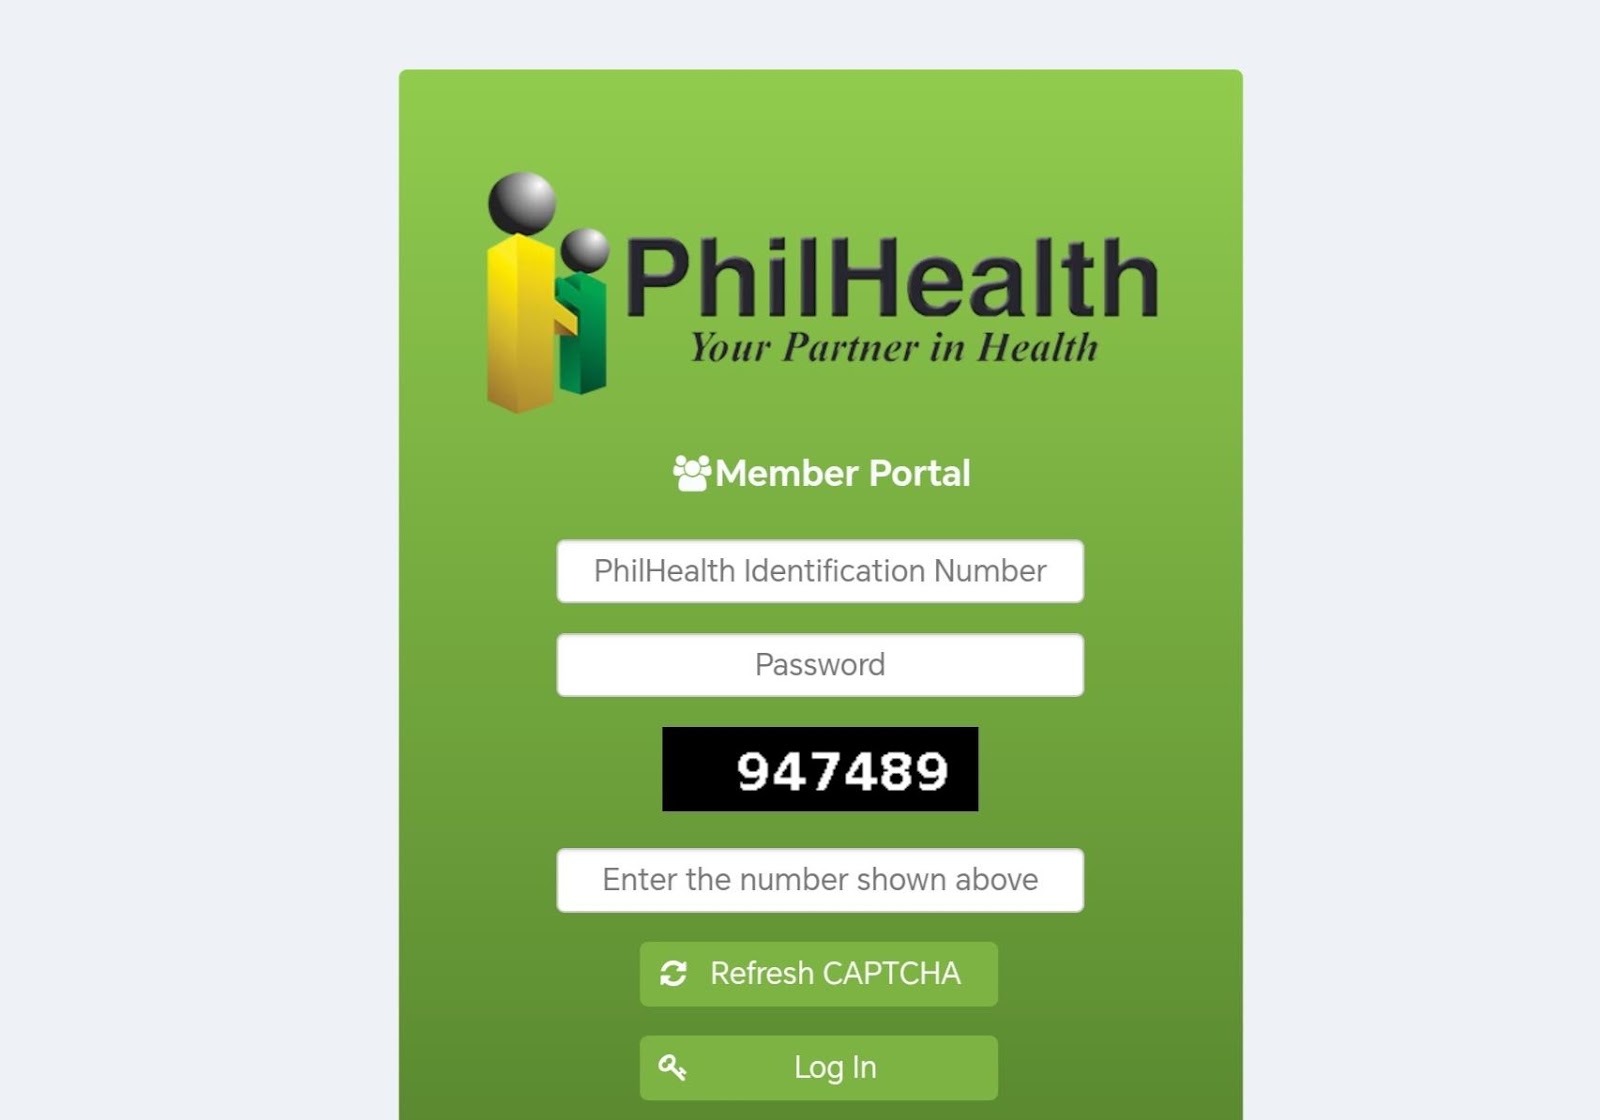 PhilHealth login page